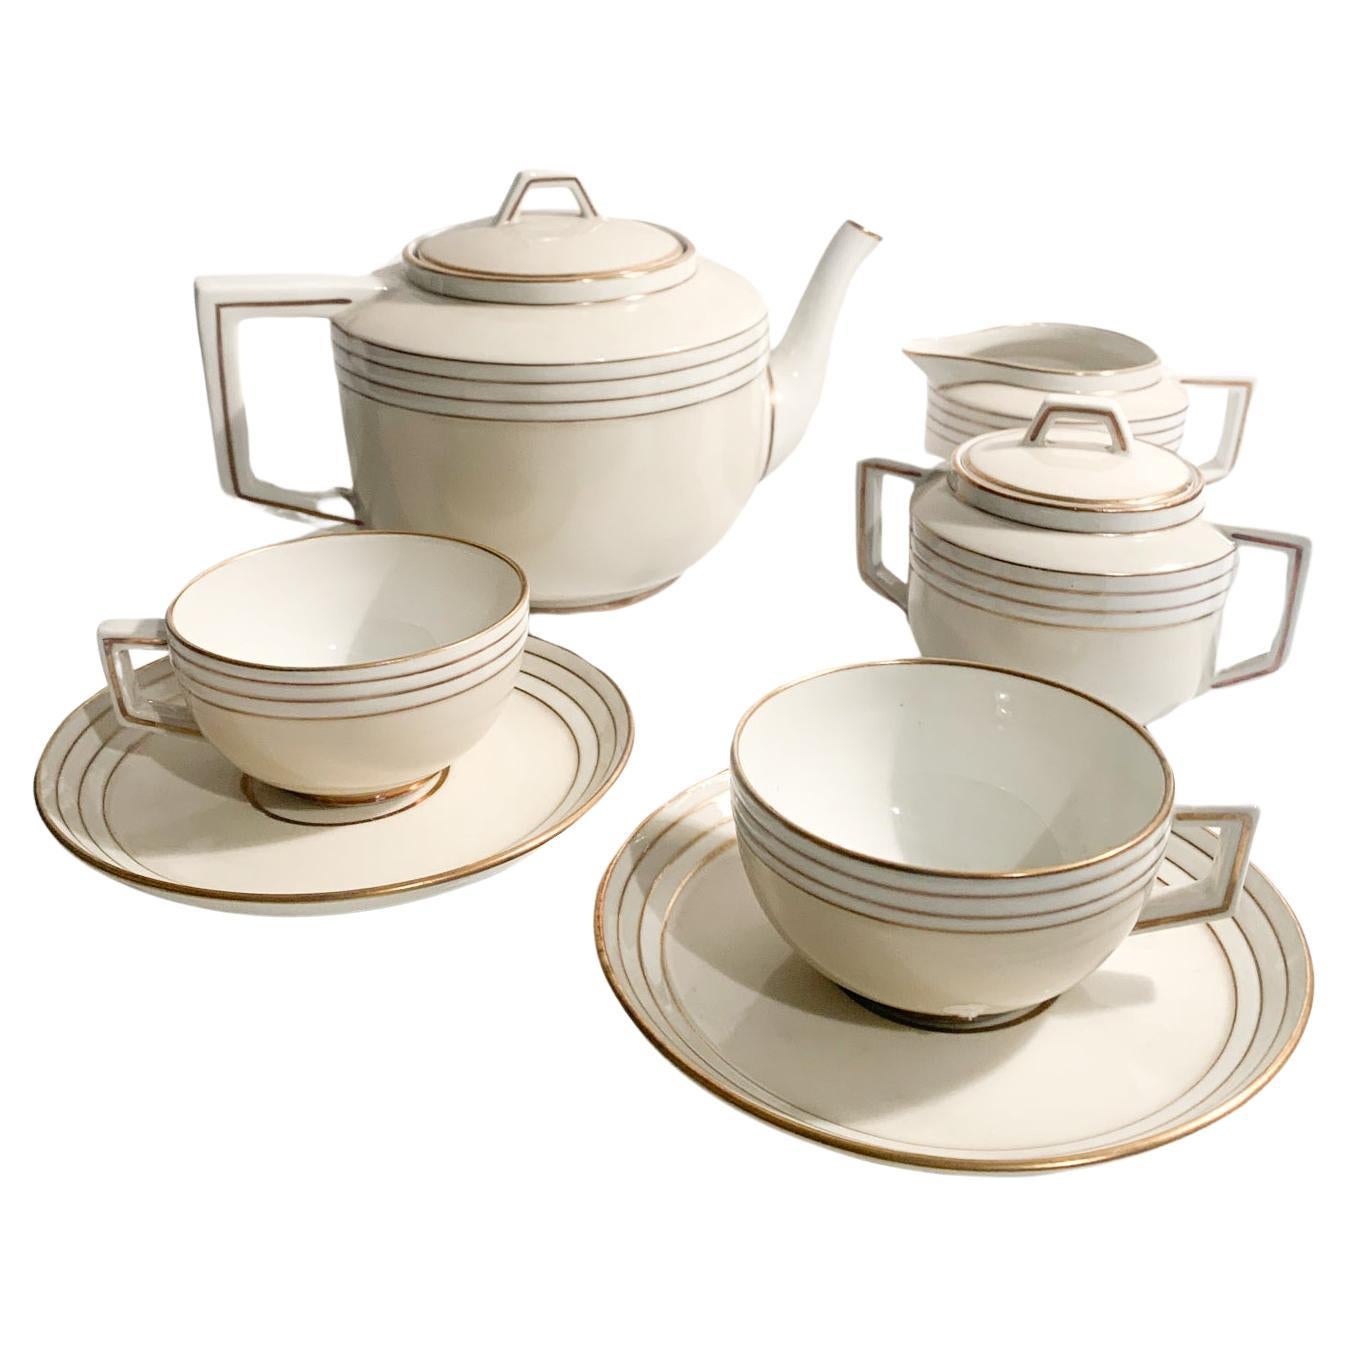 https://a.1stdibscdn.com/twelve-richard-ginori-deco-tea-set-in-porcelain-from-the-1940s-for-sale/f_75372/f_369564321699267469419/f_36956432_1699267469831_bg_processed.jpg